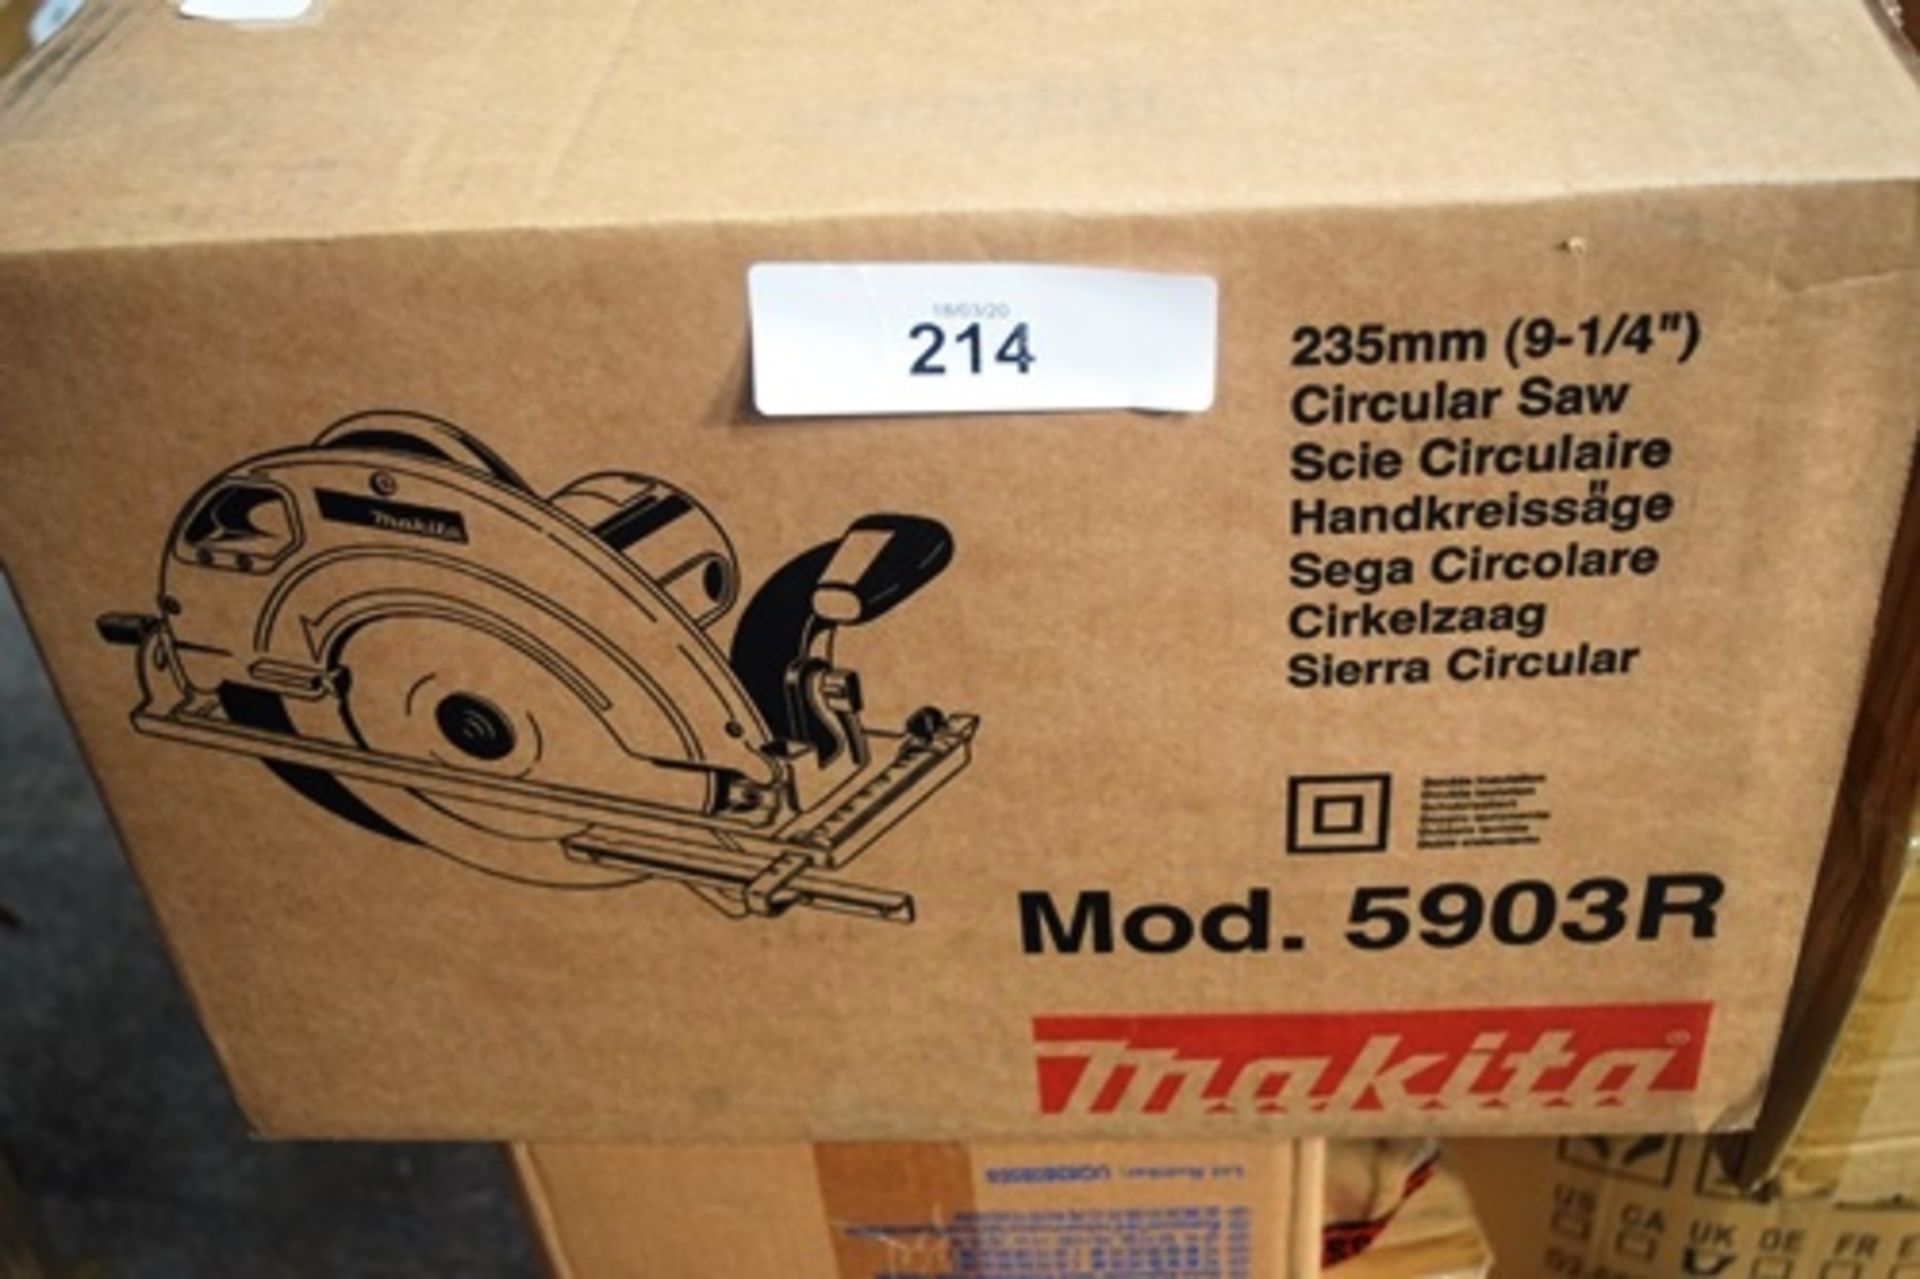 Makita electric circular saw, model 5903R, 110V - New in box (GS22)